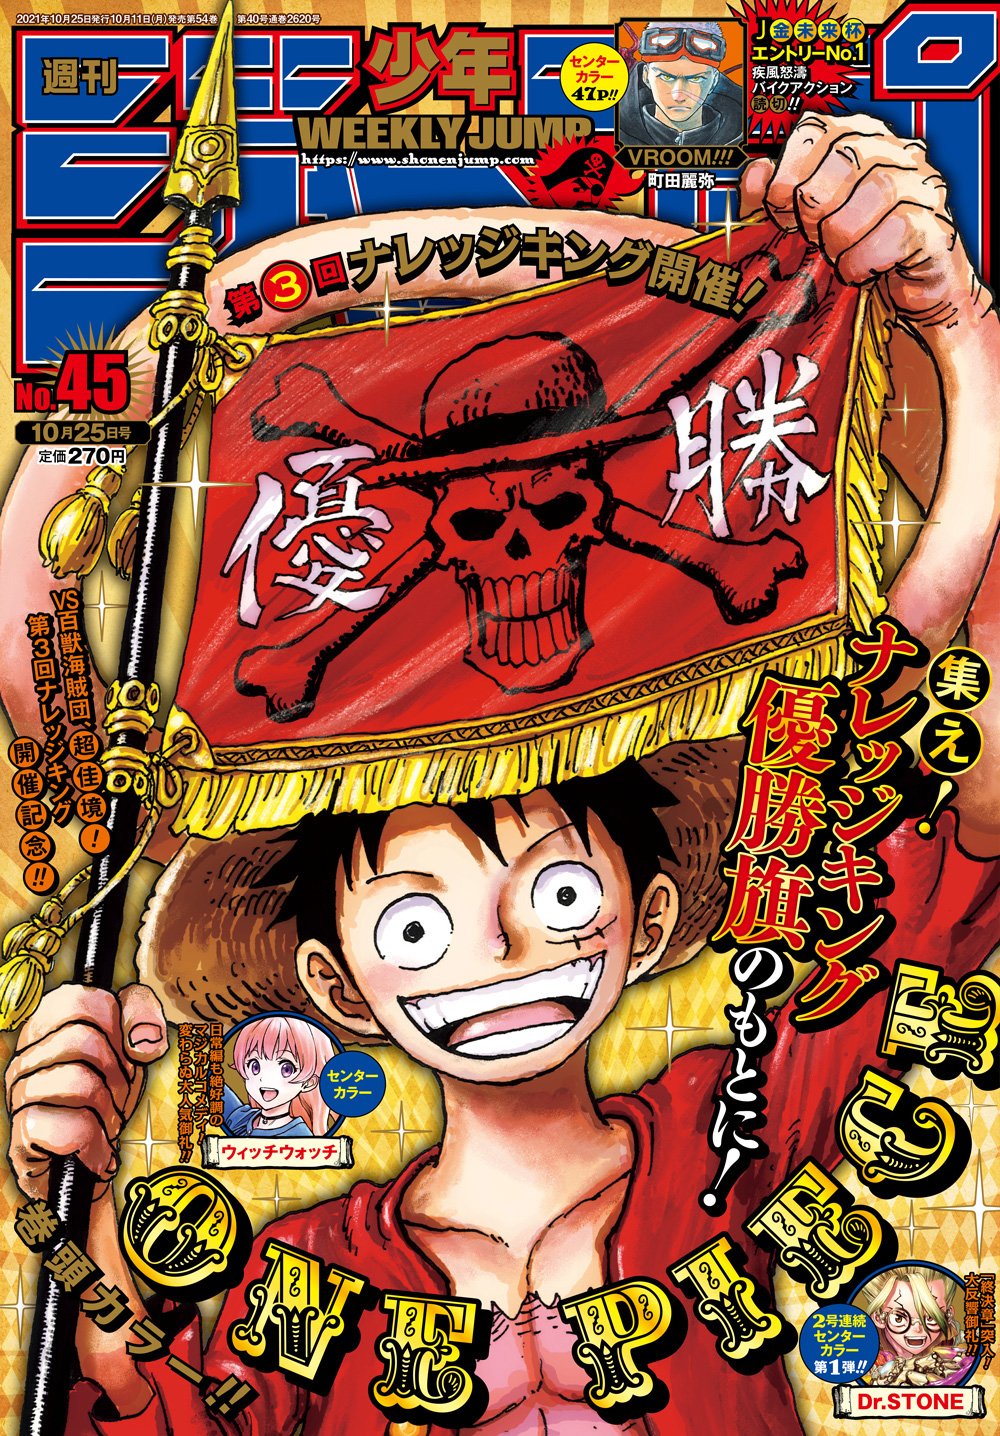 Shonen Jump News Unofficial Weekly Shonen Jump Issue 45 Cover T Co Hxfv06rjee Twitter